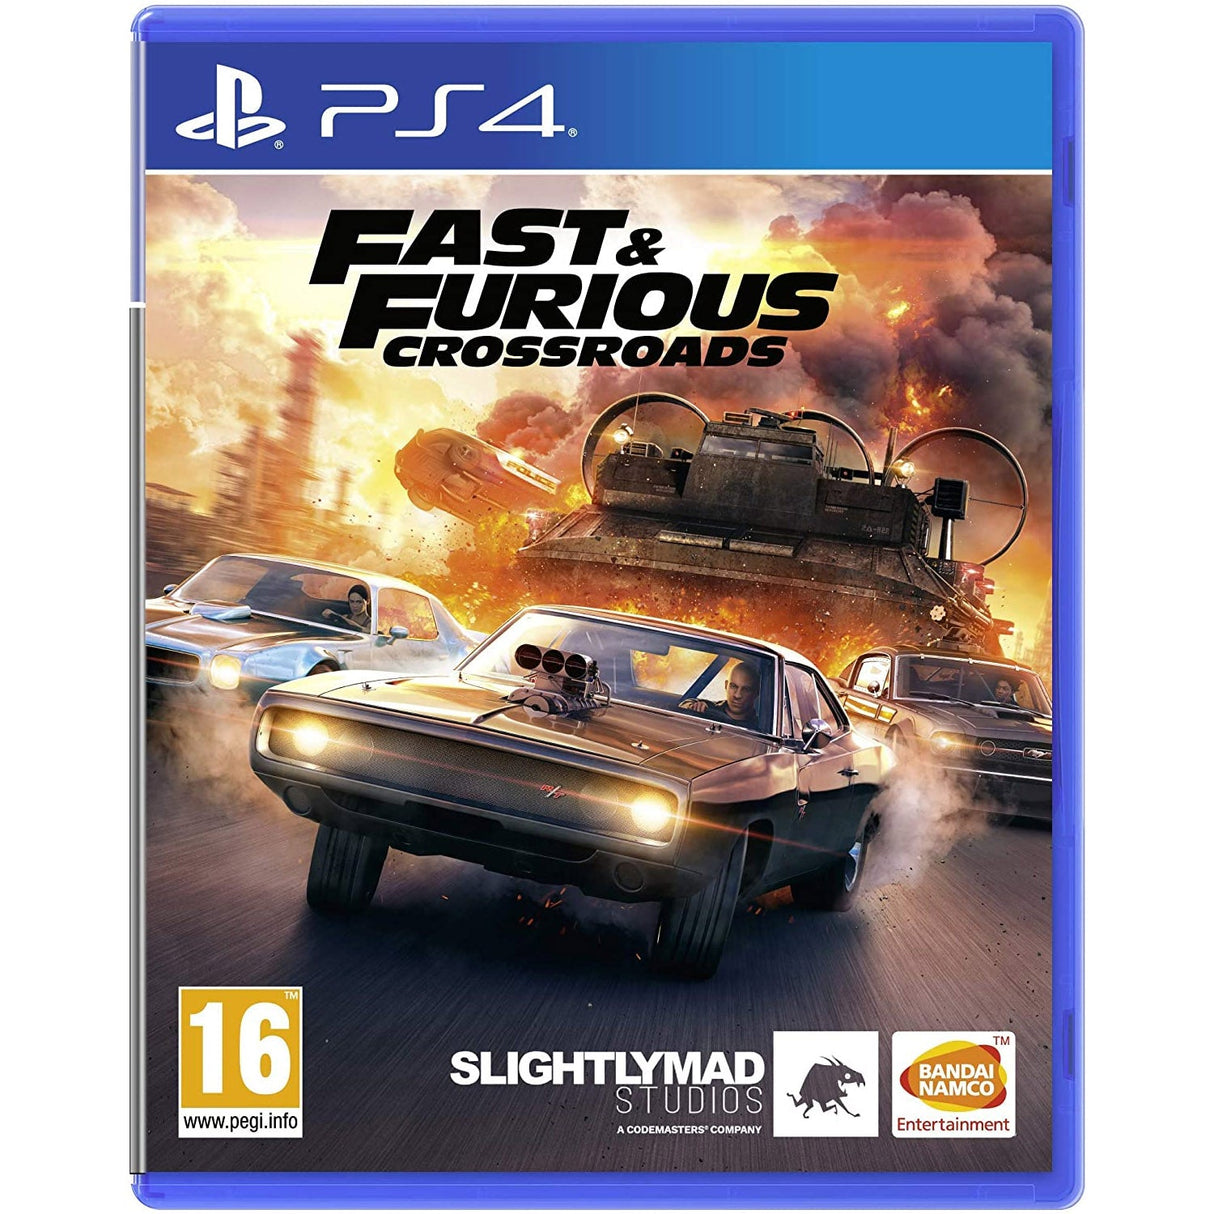 Fast & Furious Crossroads for PlayStation 4 "Region 2" - Level UpLevel UpPlaystation Video Games3391892009064